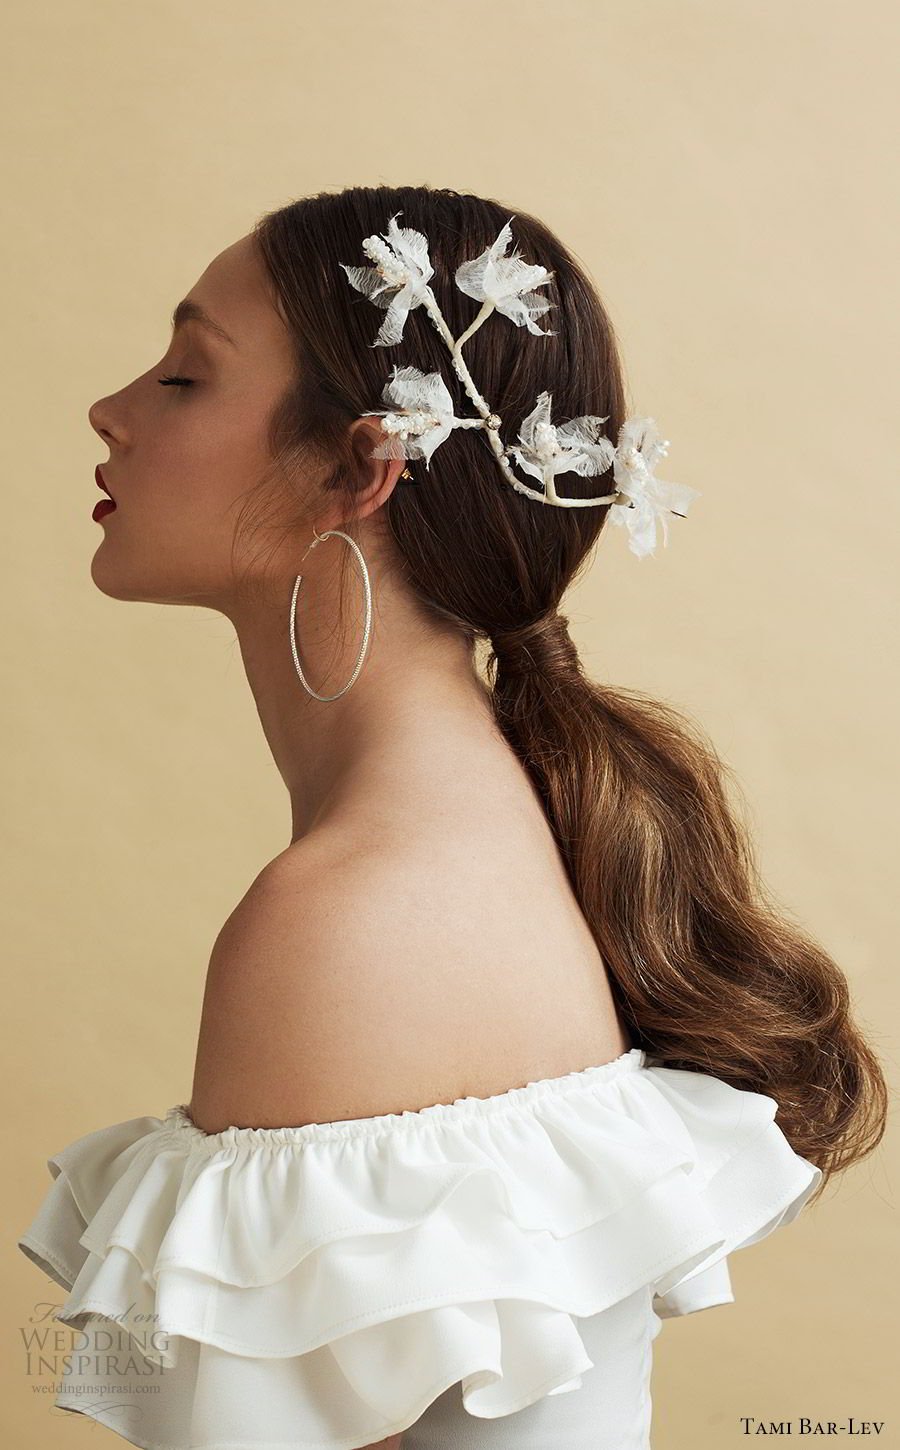 tami bar lev headpiece 2019 bridal hair accessories flirty flowers back piece hair accessory